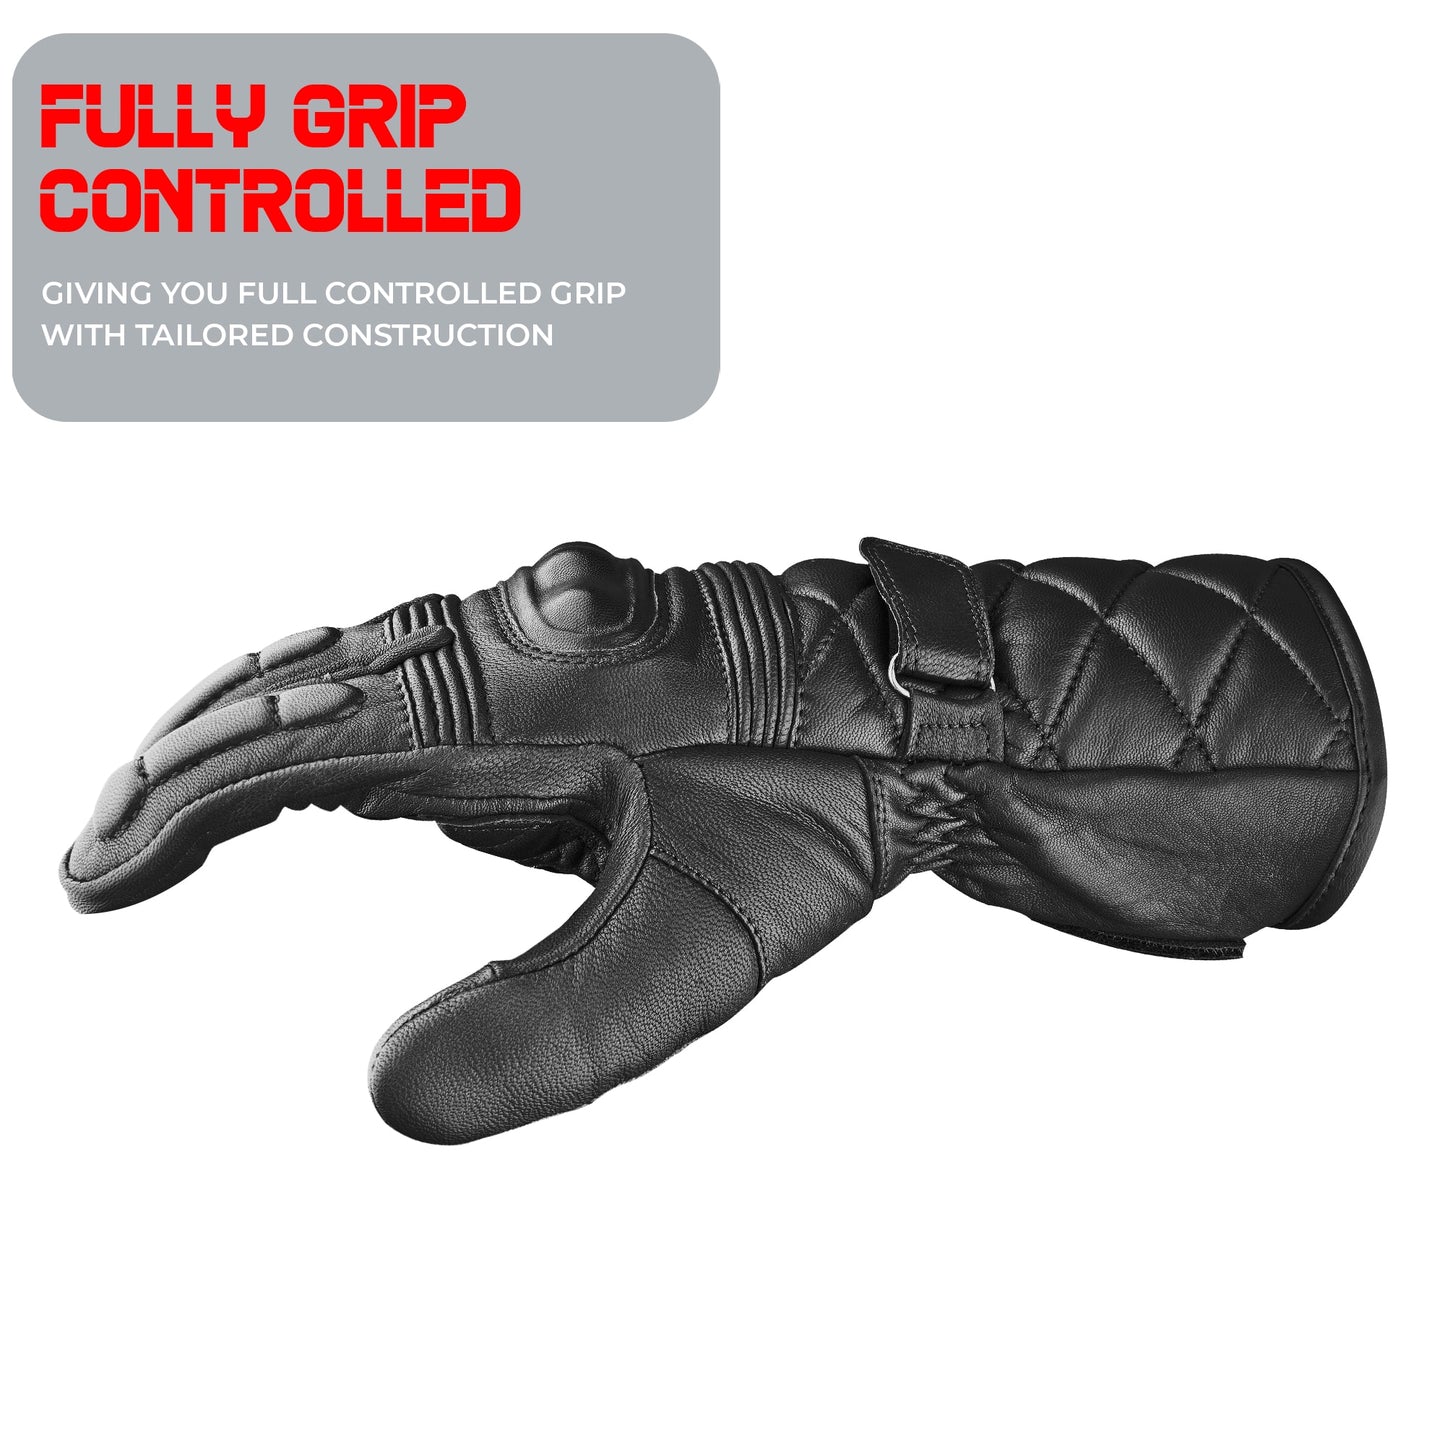 Viper VPR004 Men Retro Gloves - Black